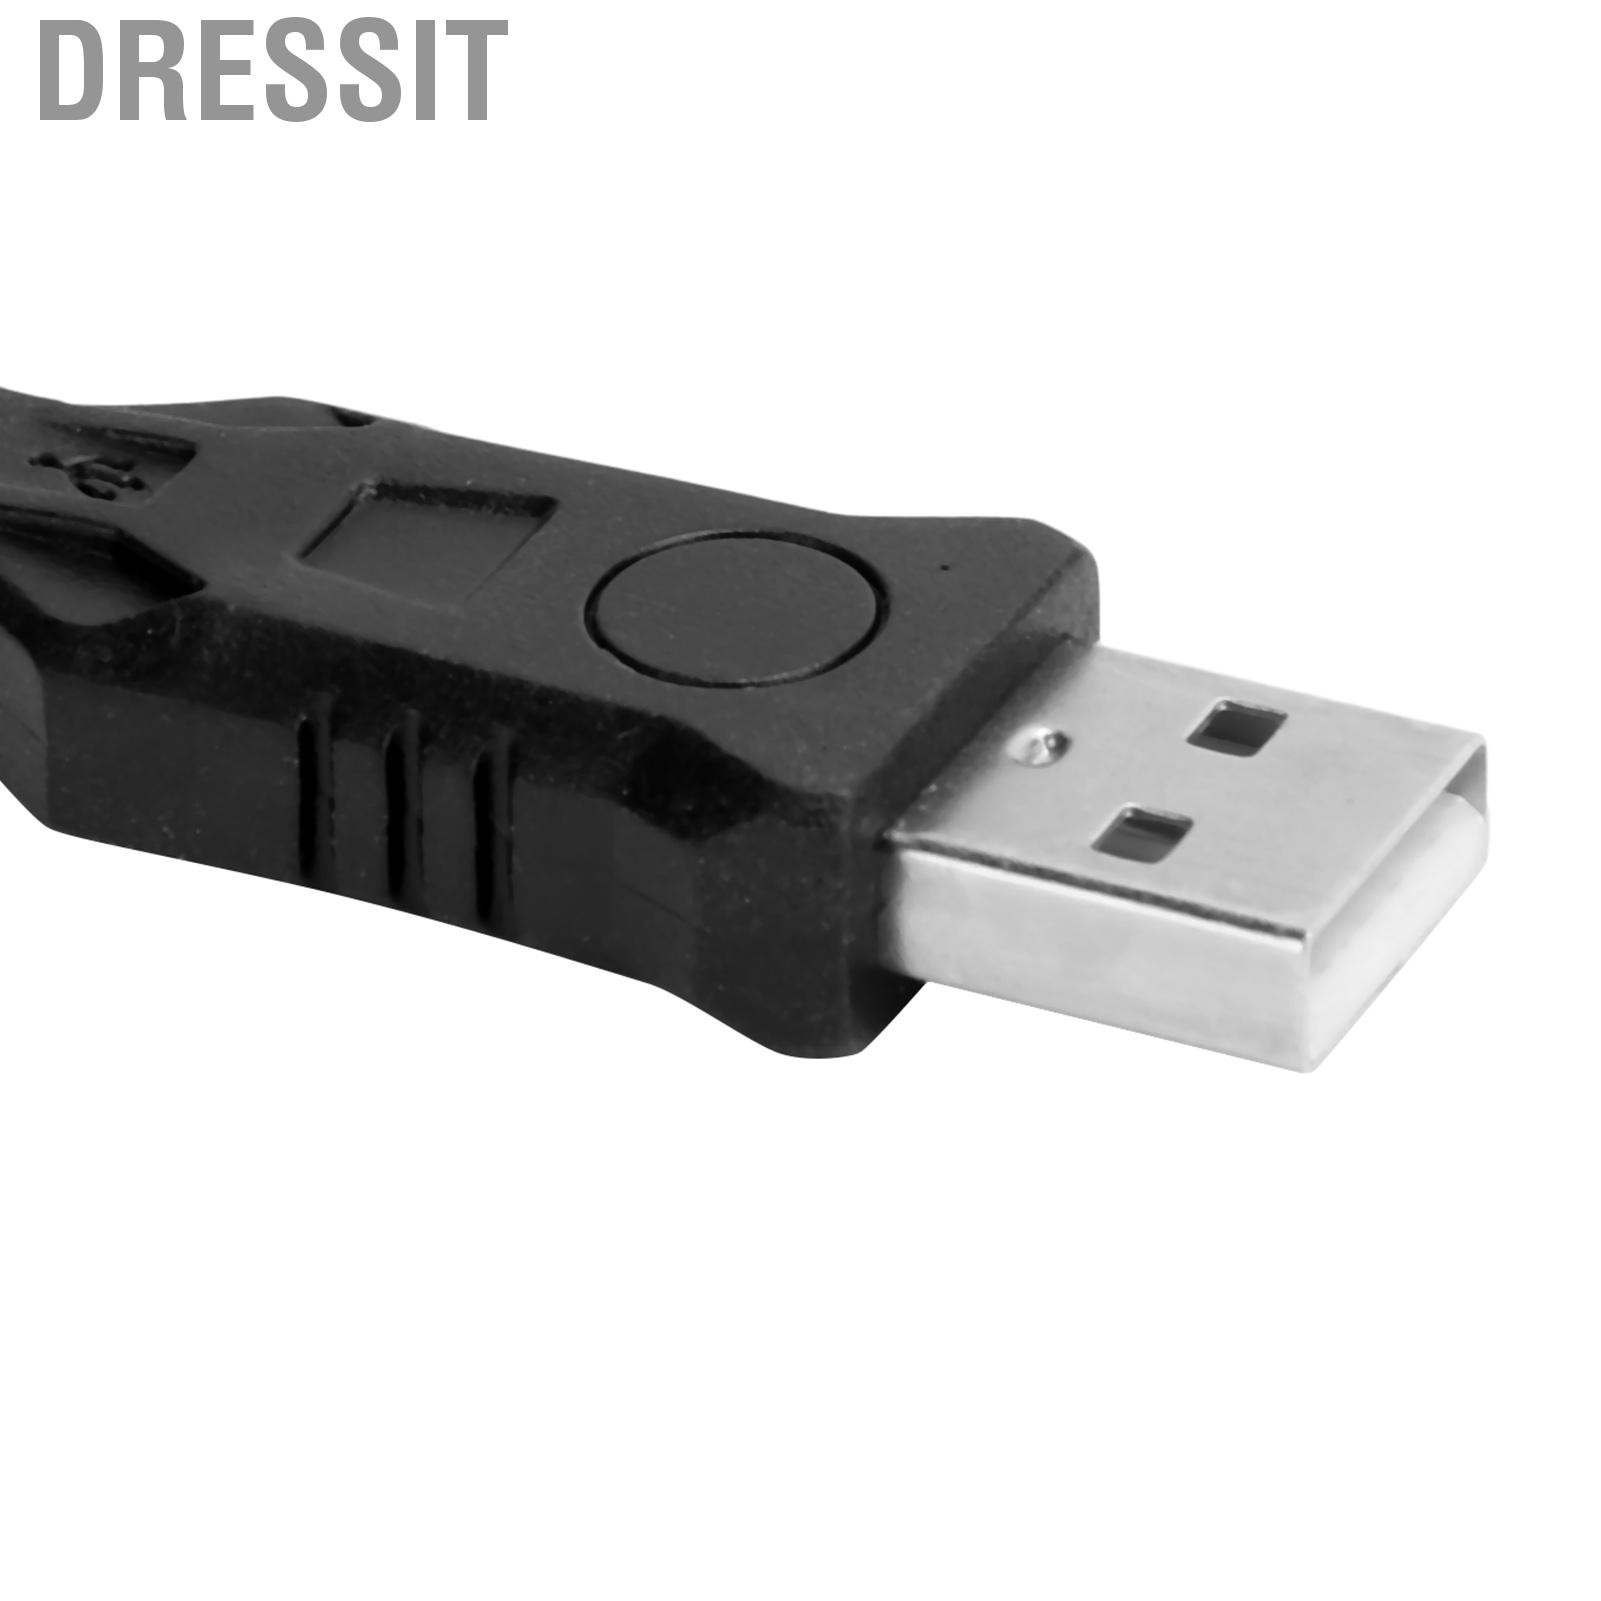 Dressit Mechanical Keyboard 87 Keys Wired USB Backlight Gaming Supplies for Laptop GK‑10